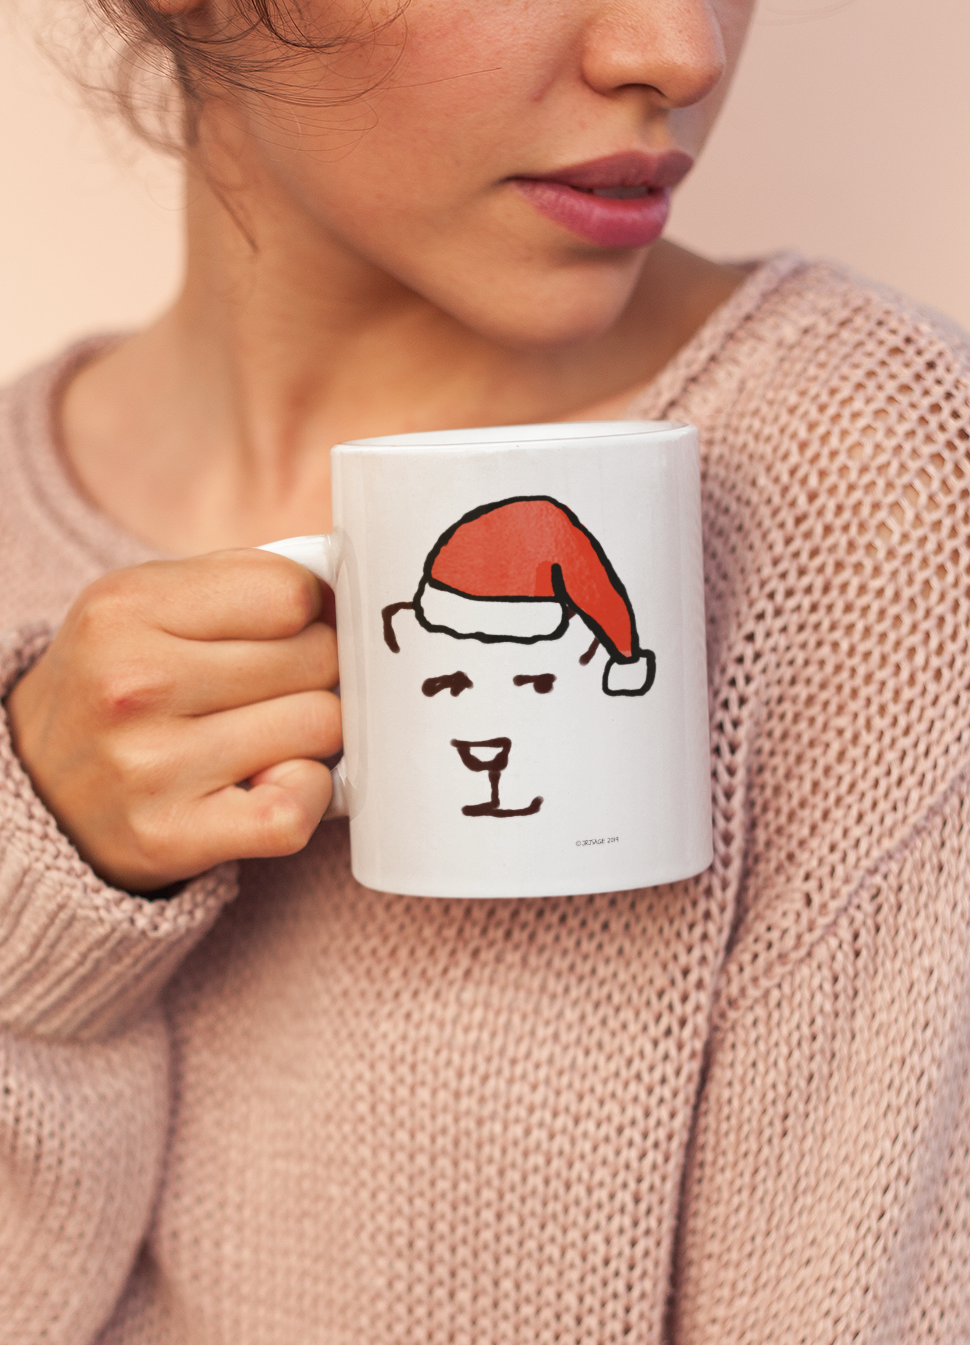 Young woman holding a Santa Polar Bear Christmas mug design by Hector and Bone - A cute bear wearing a Santa hat